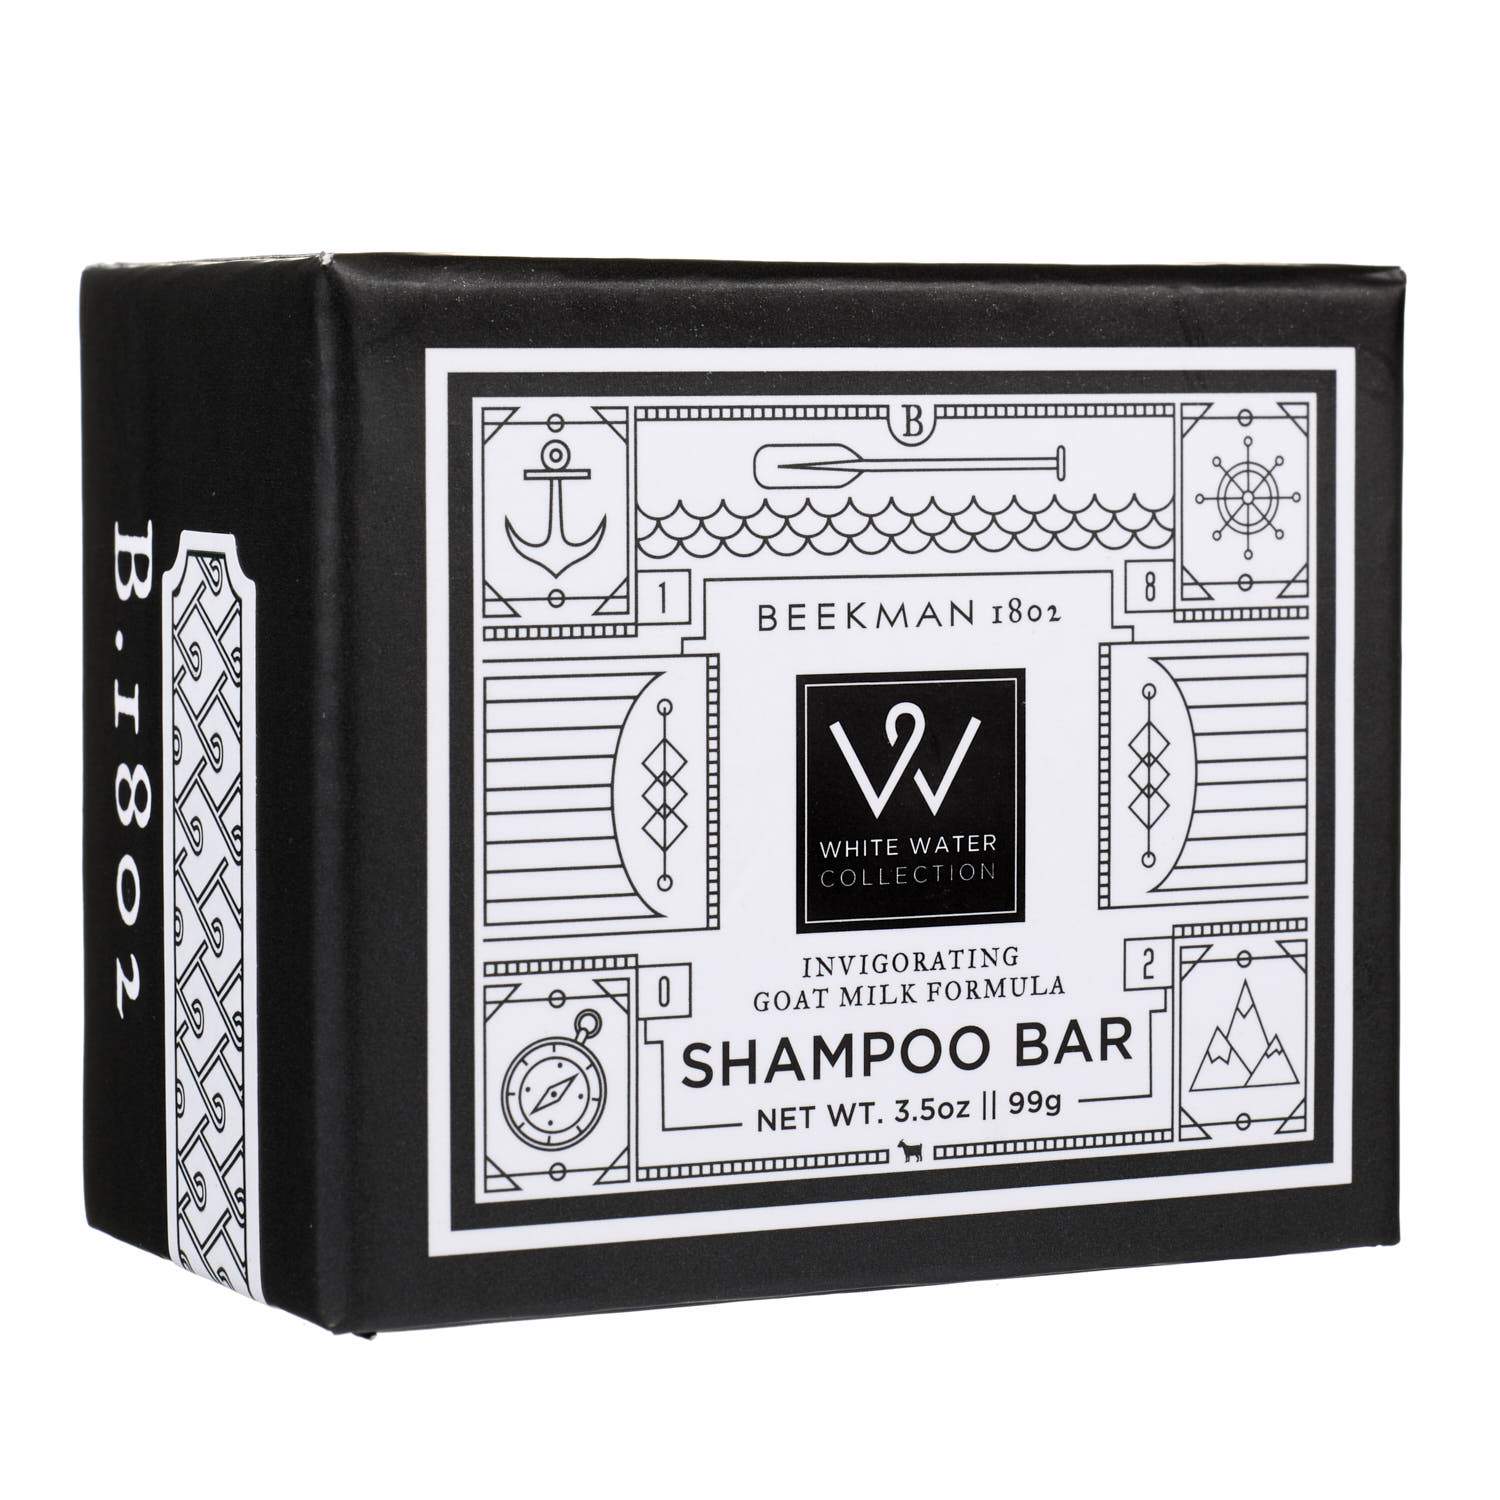 White Water Shampoo Bar